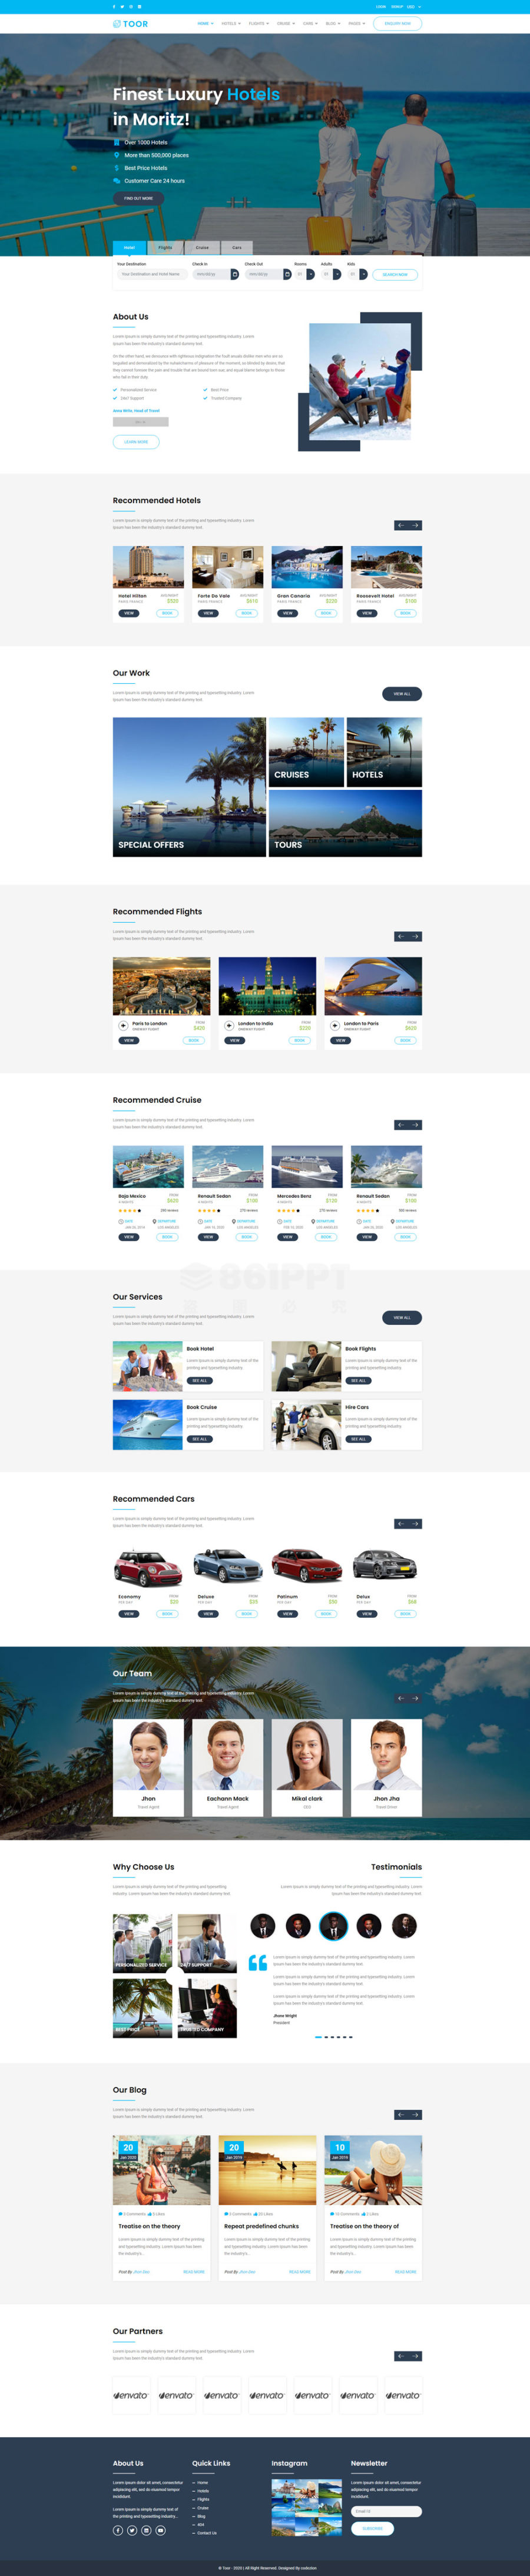 Toor旅游酒店机票一站式服务平台网站模板